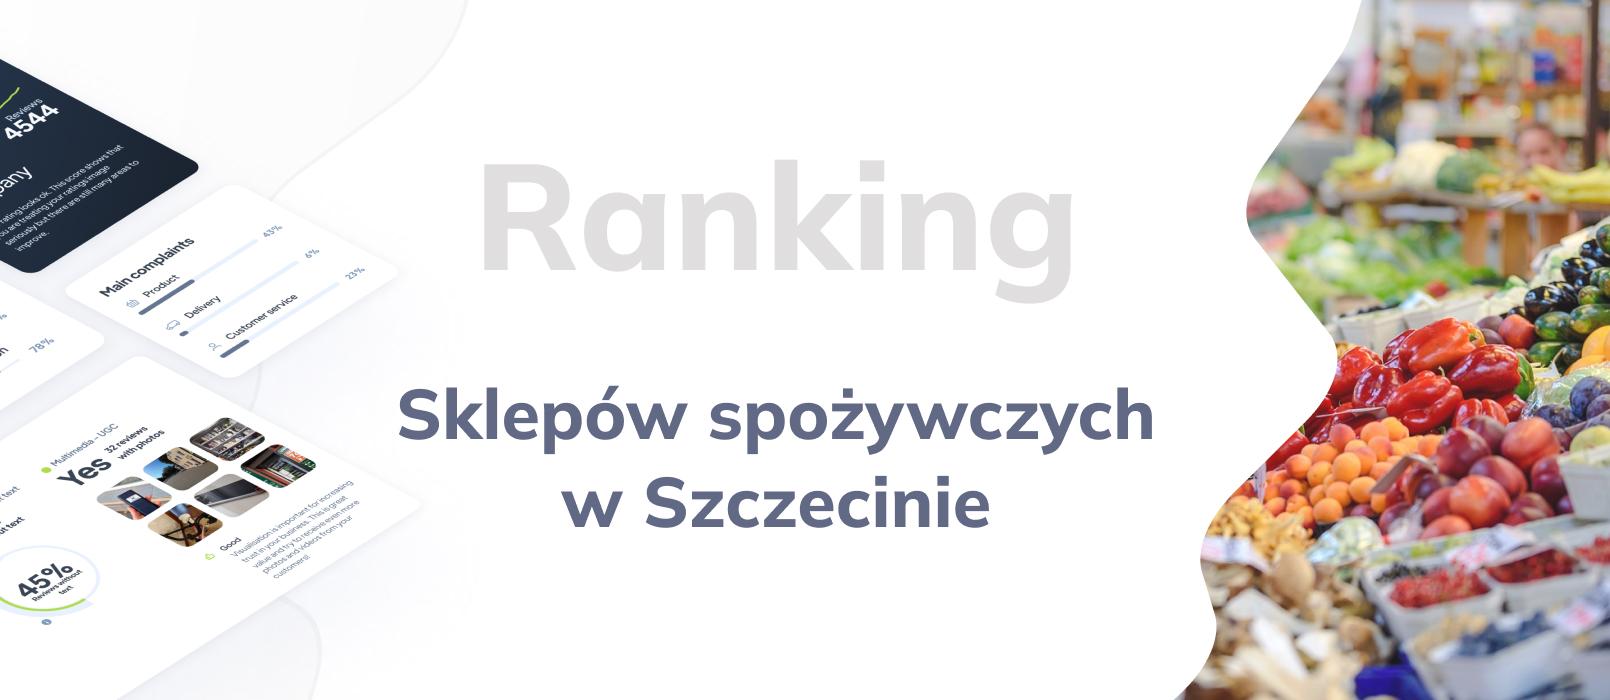 Lebensmittelgeschäfte in Stettin - TOP 10 Ranking